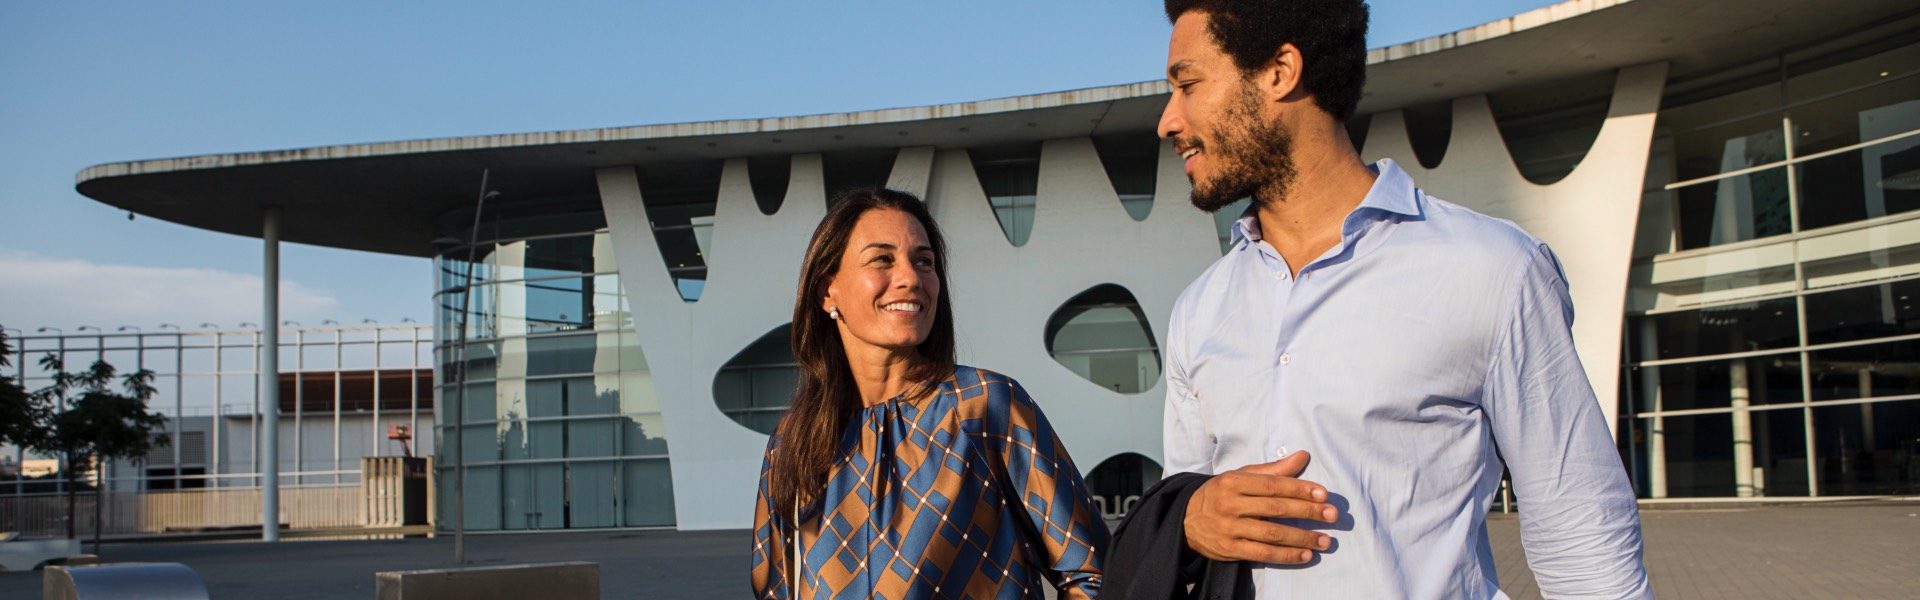 Woman and man smiling, opposite the Gran Via Fira de Barcelona Trade complex